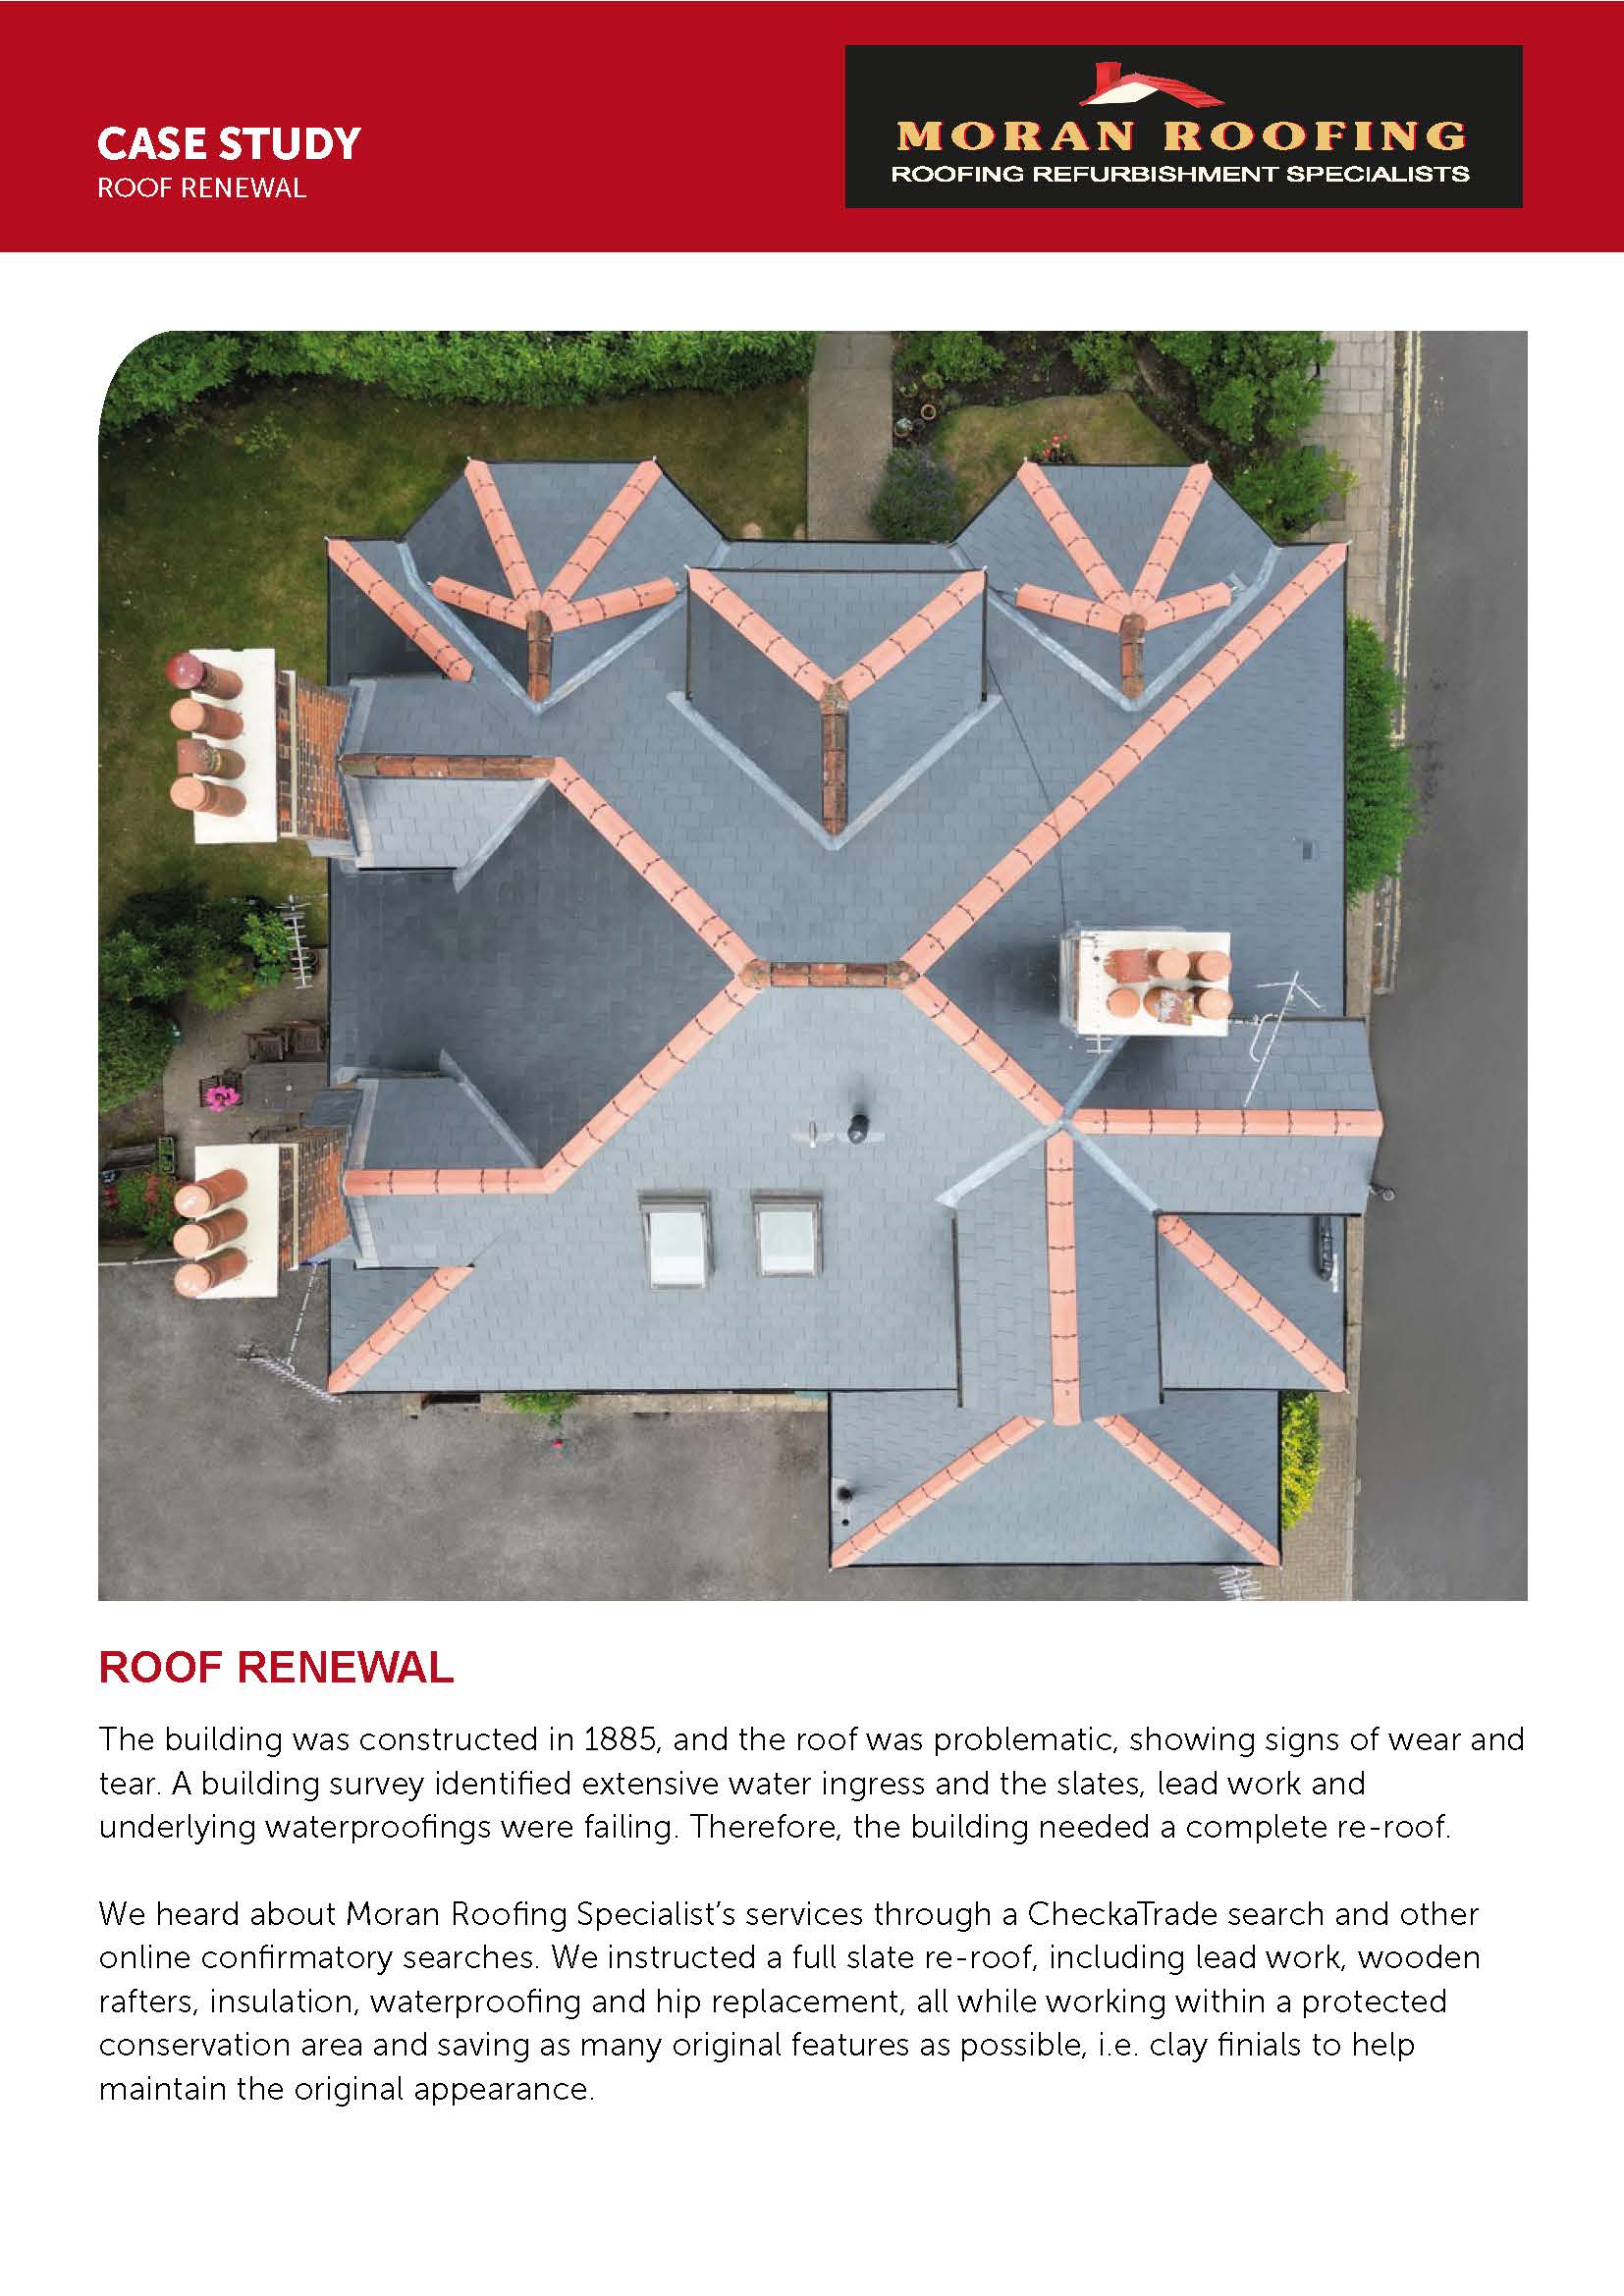 Roof Renewal